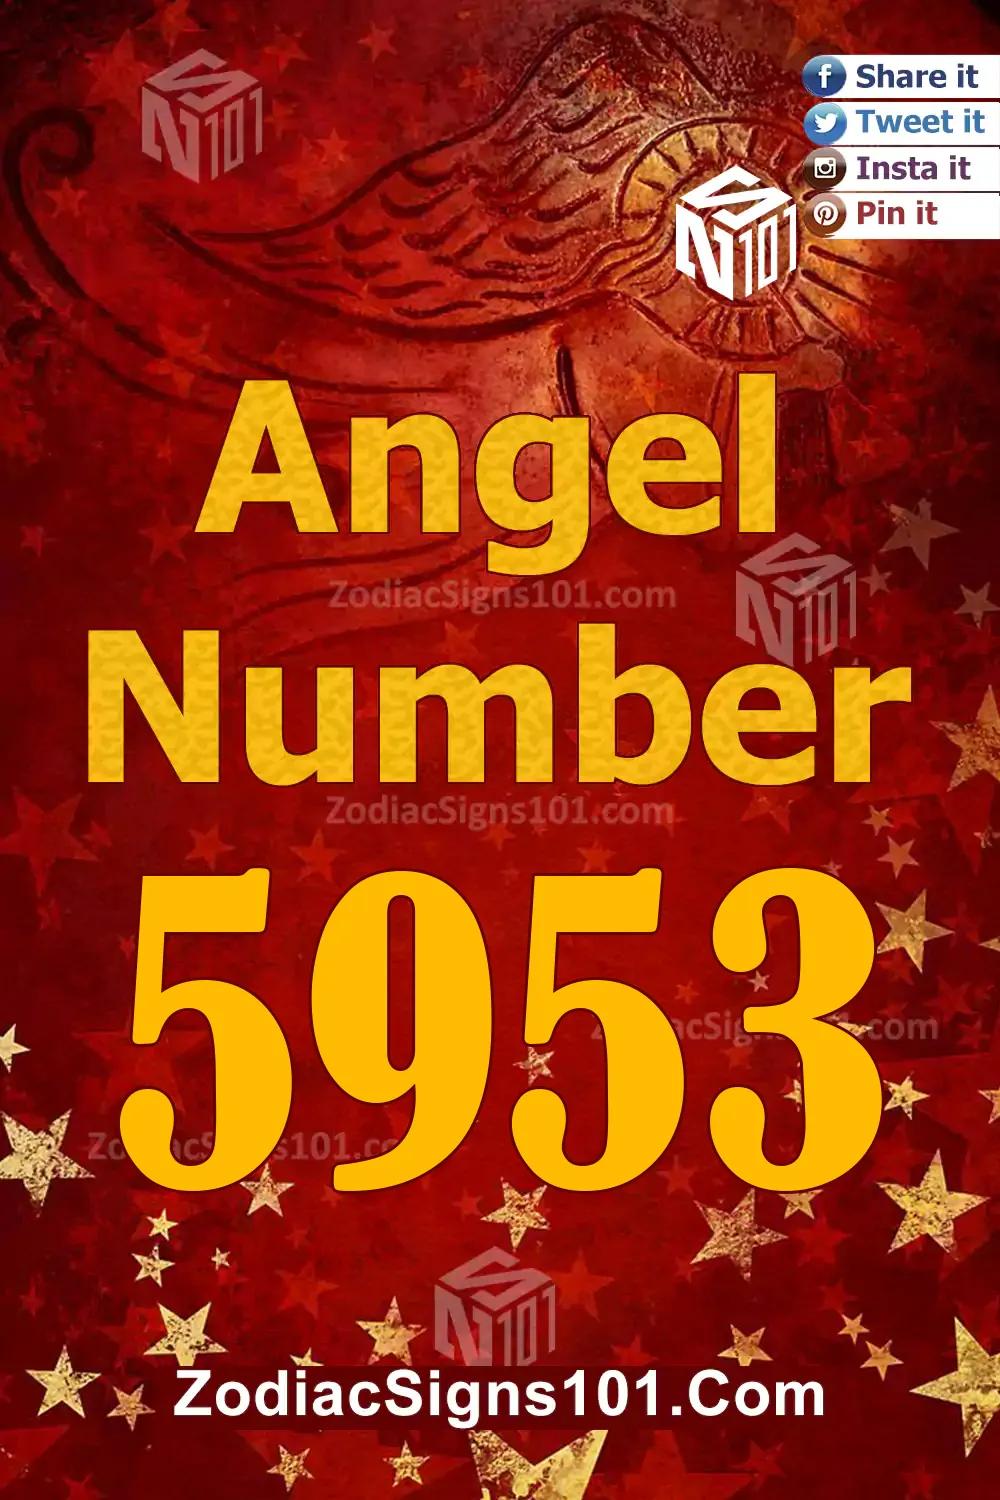 5953-Angel-Number-Meaning.jpg